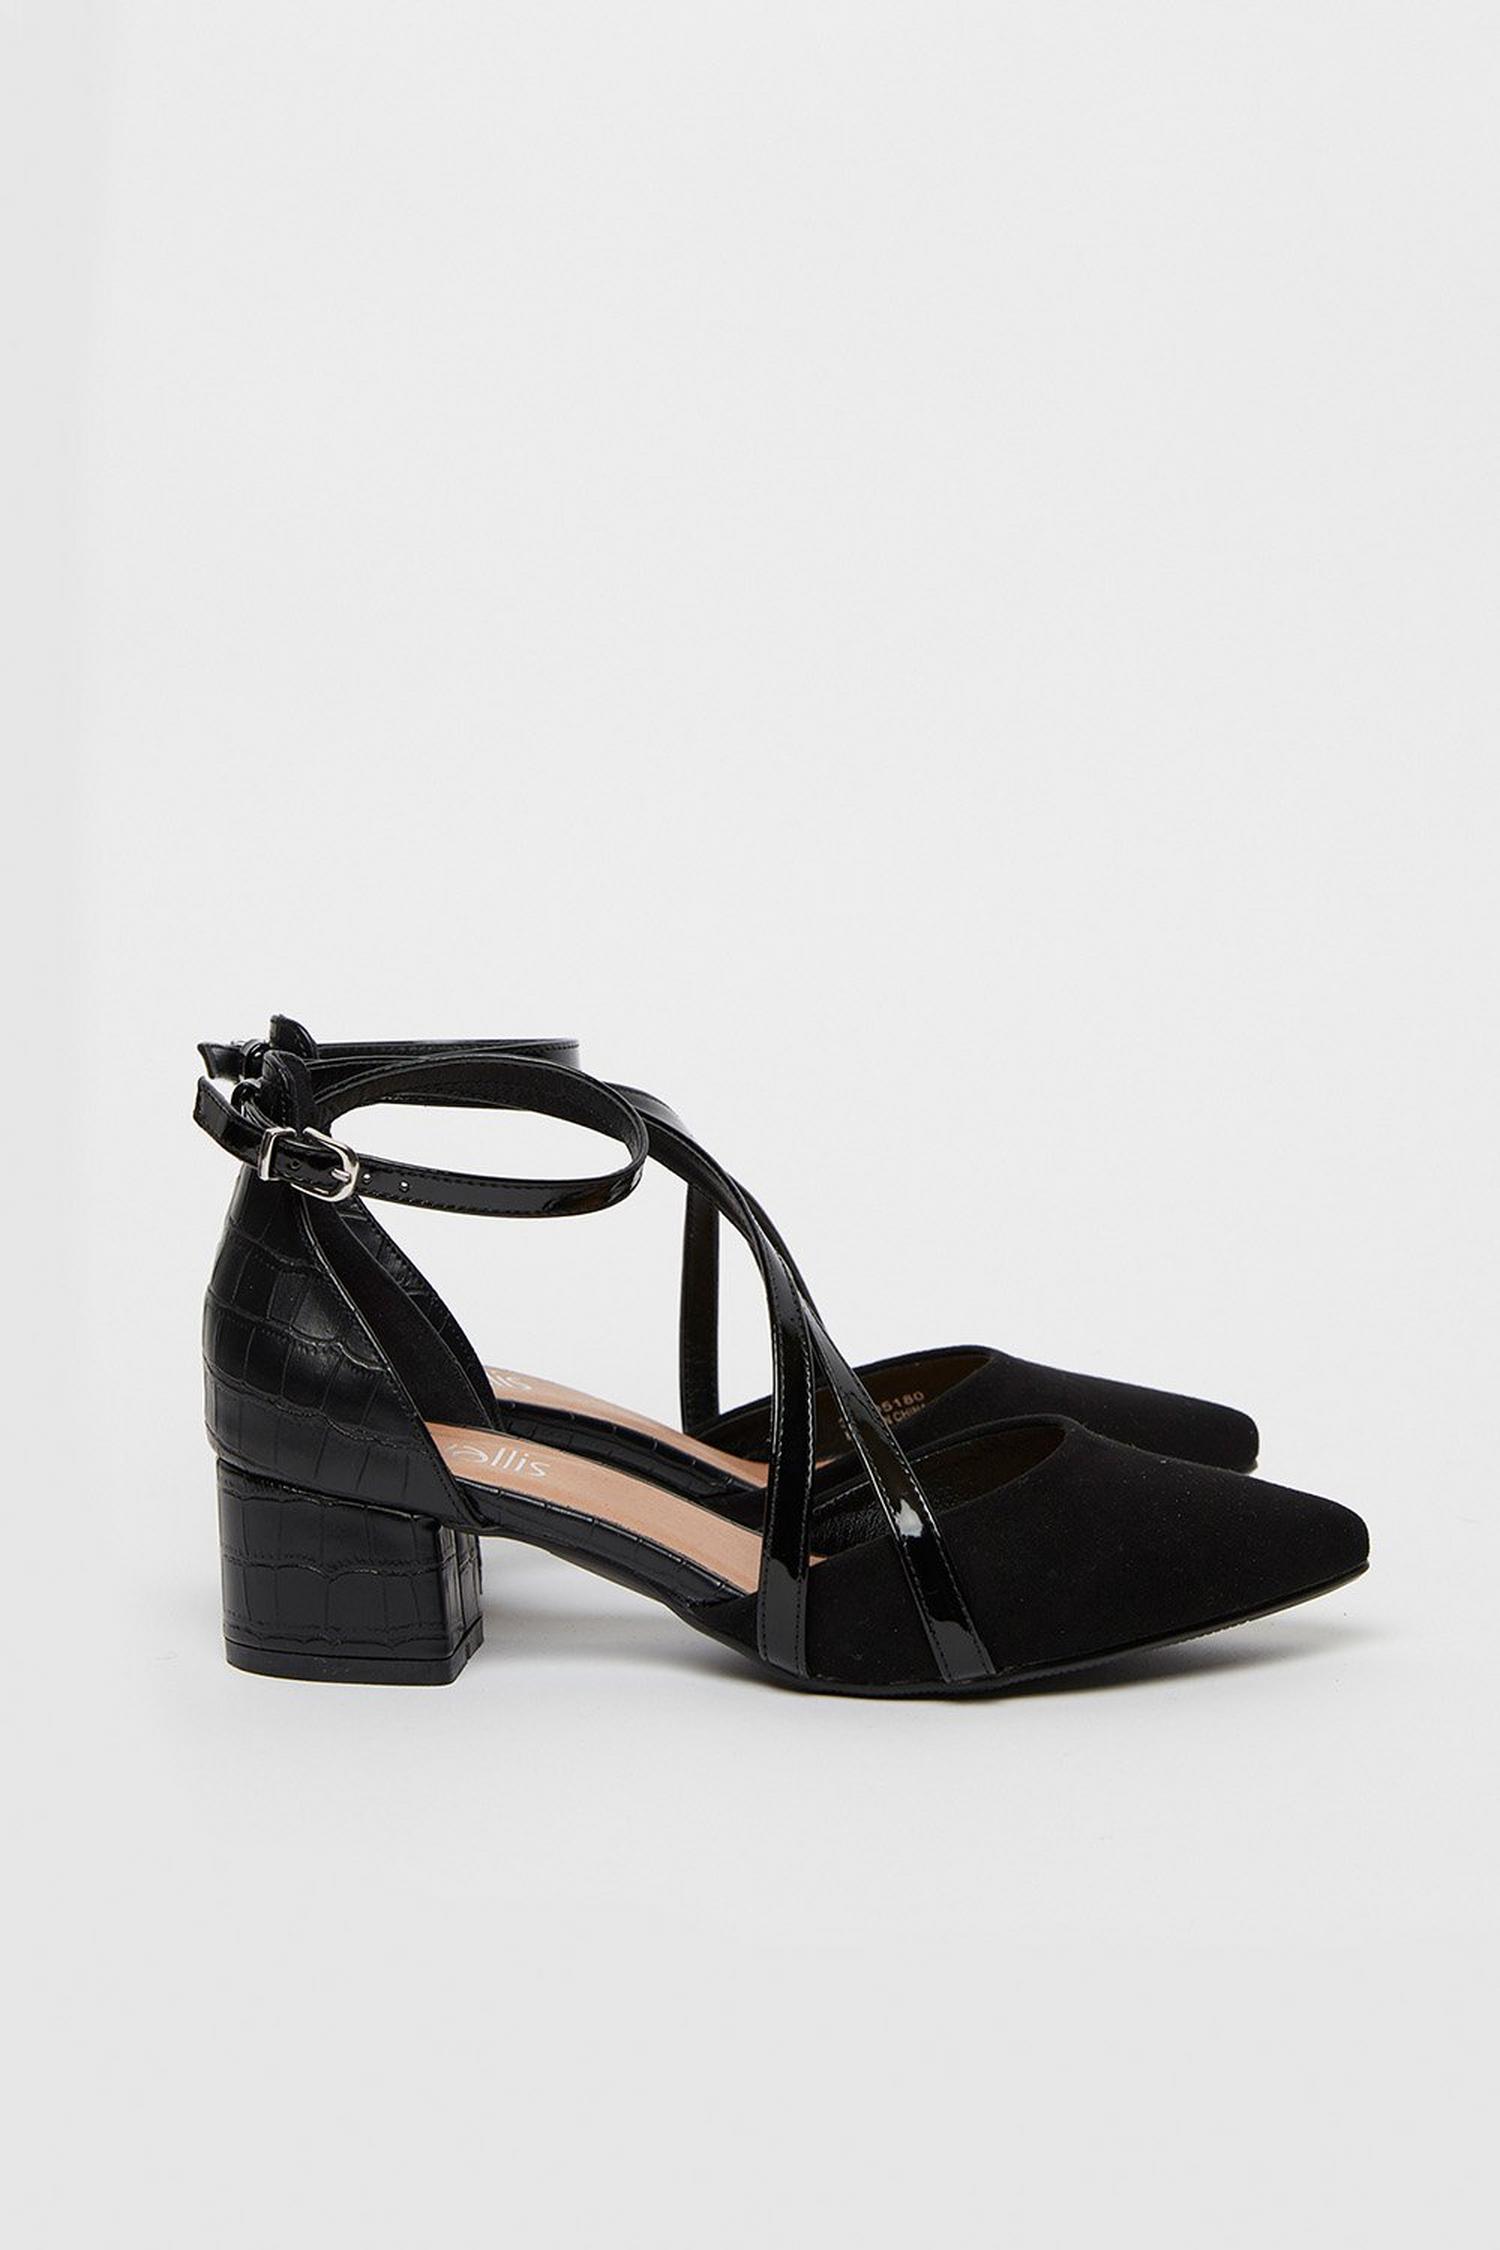 Black Ankle Strap Court Shoe | Wallis UK